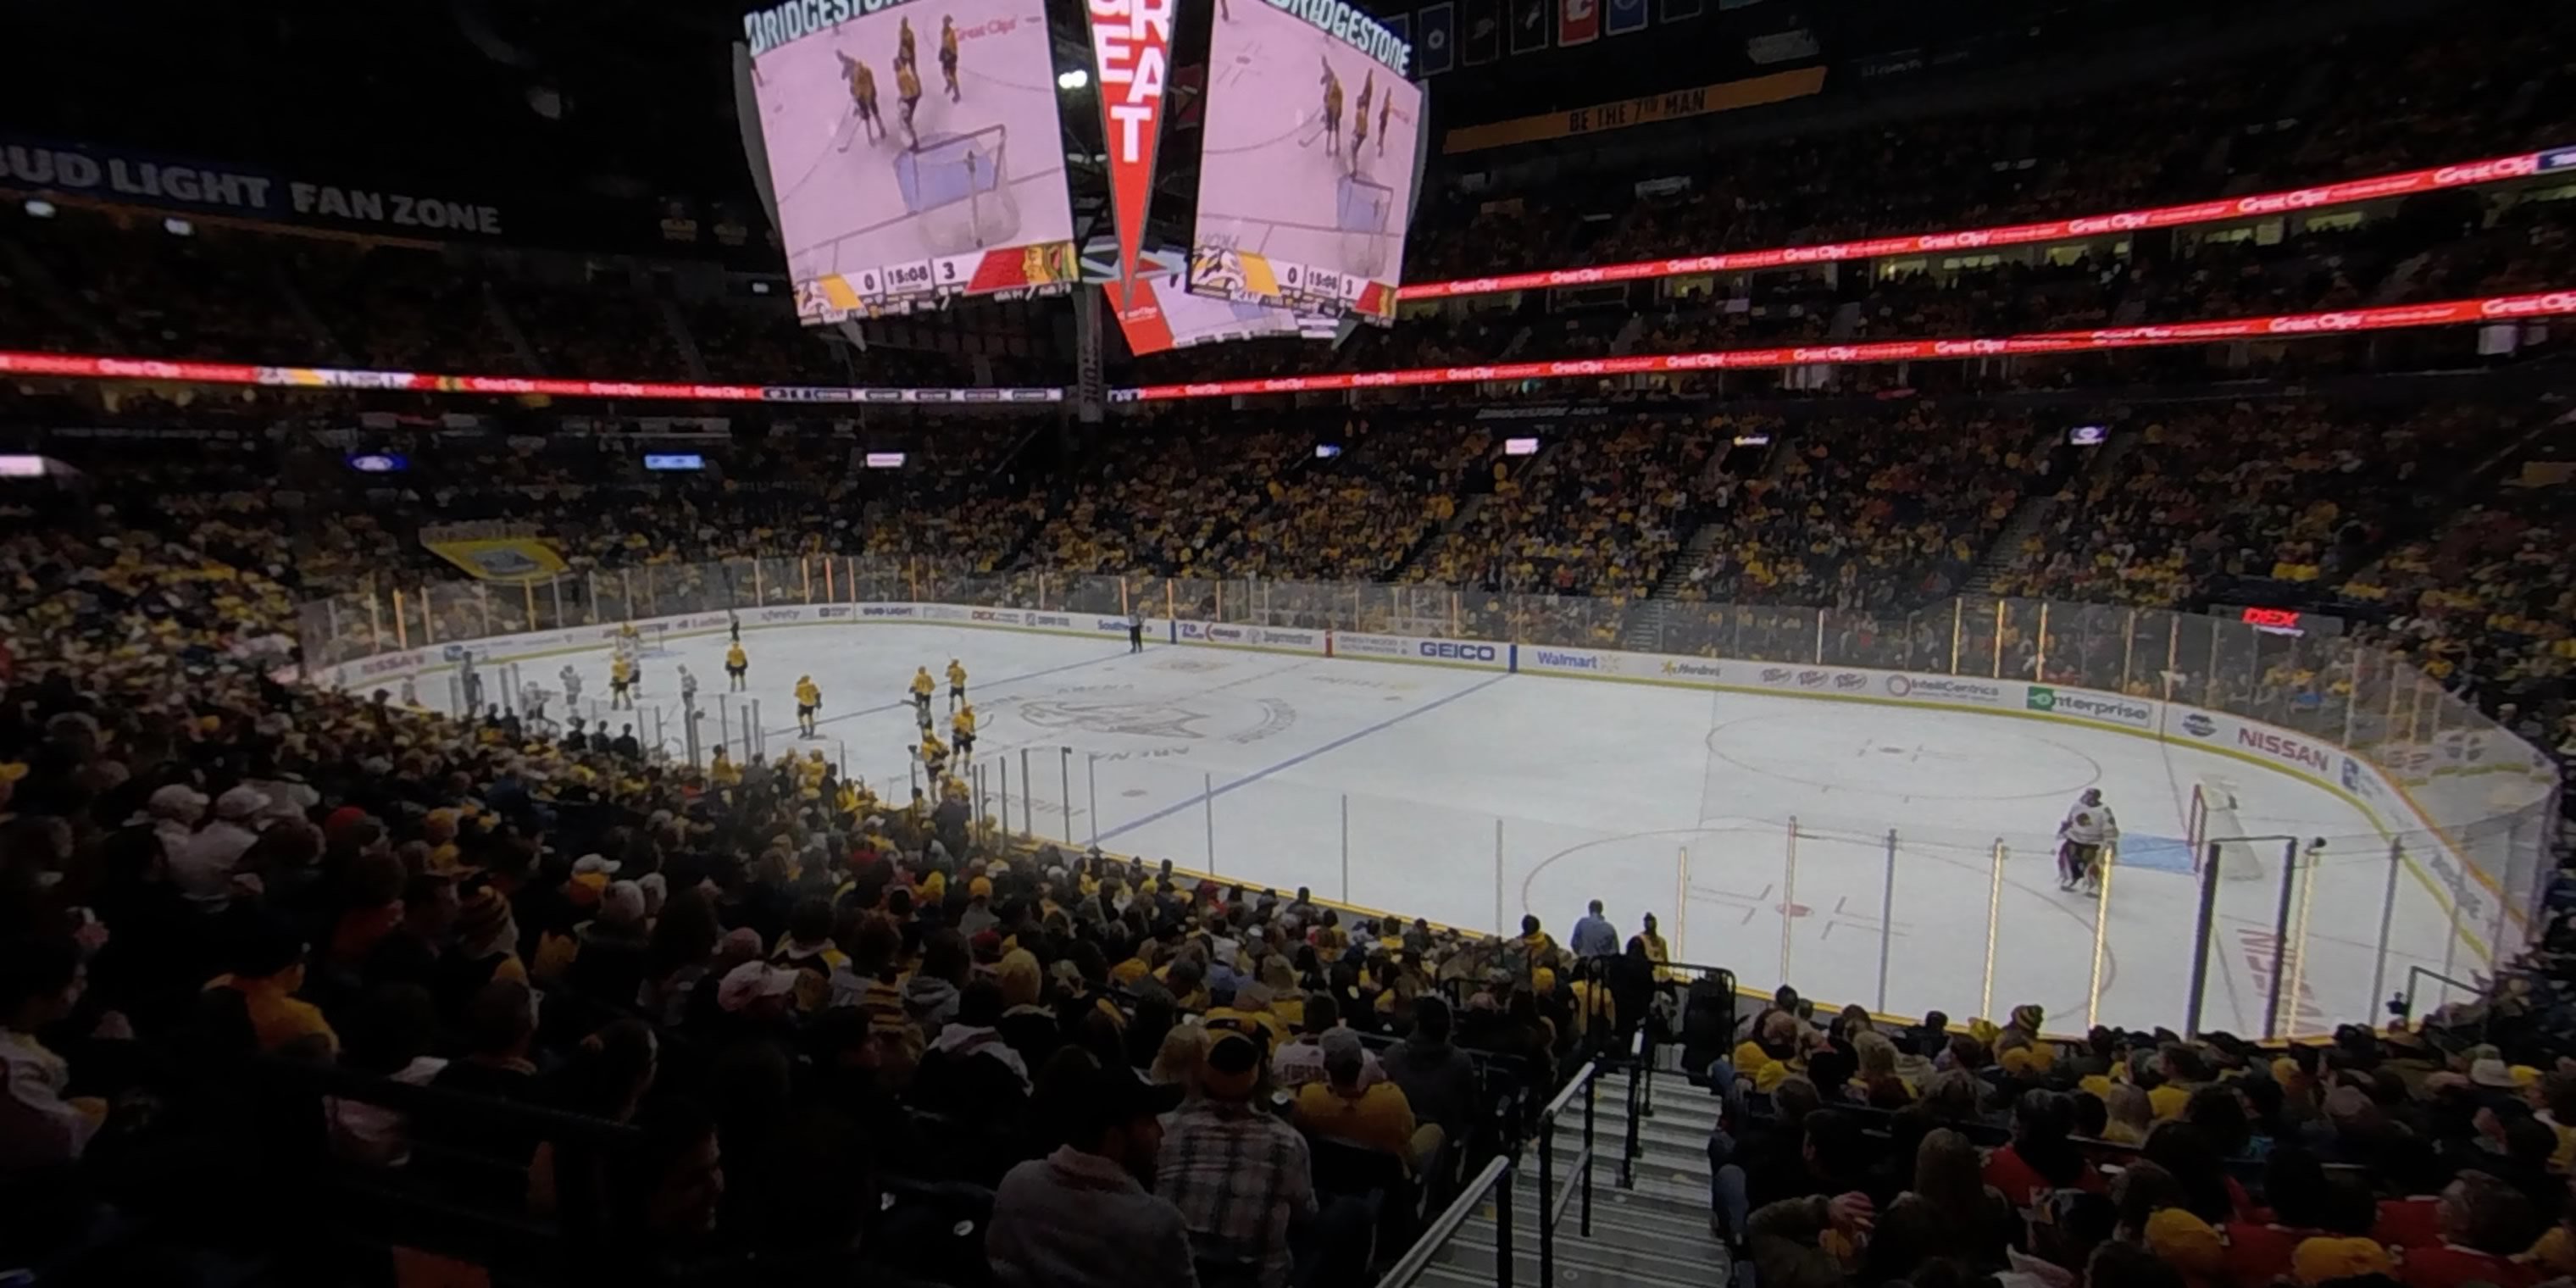 section 117 panoramic seat view  for hockey - bridgestone arena